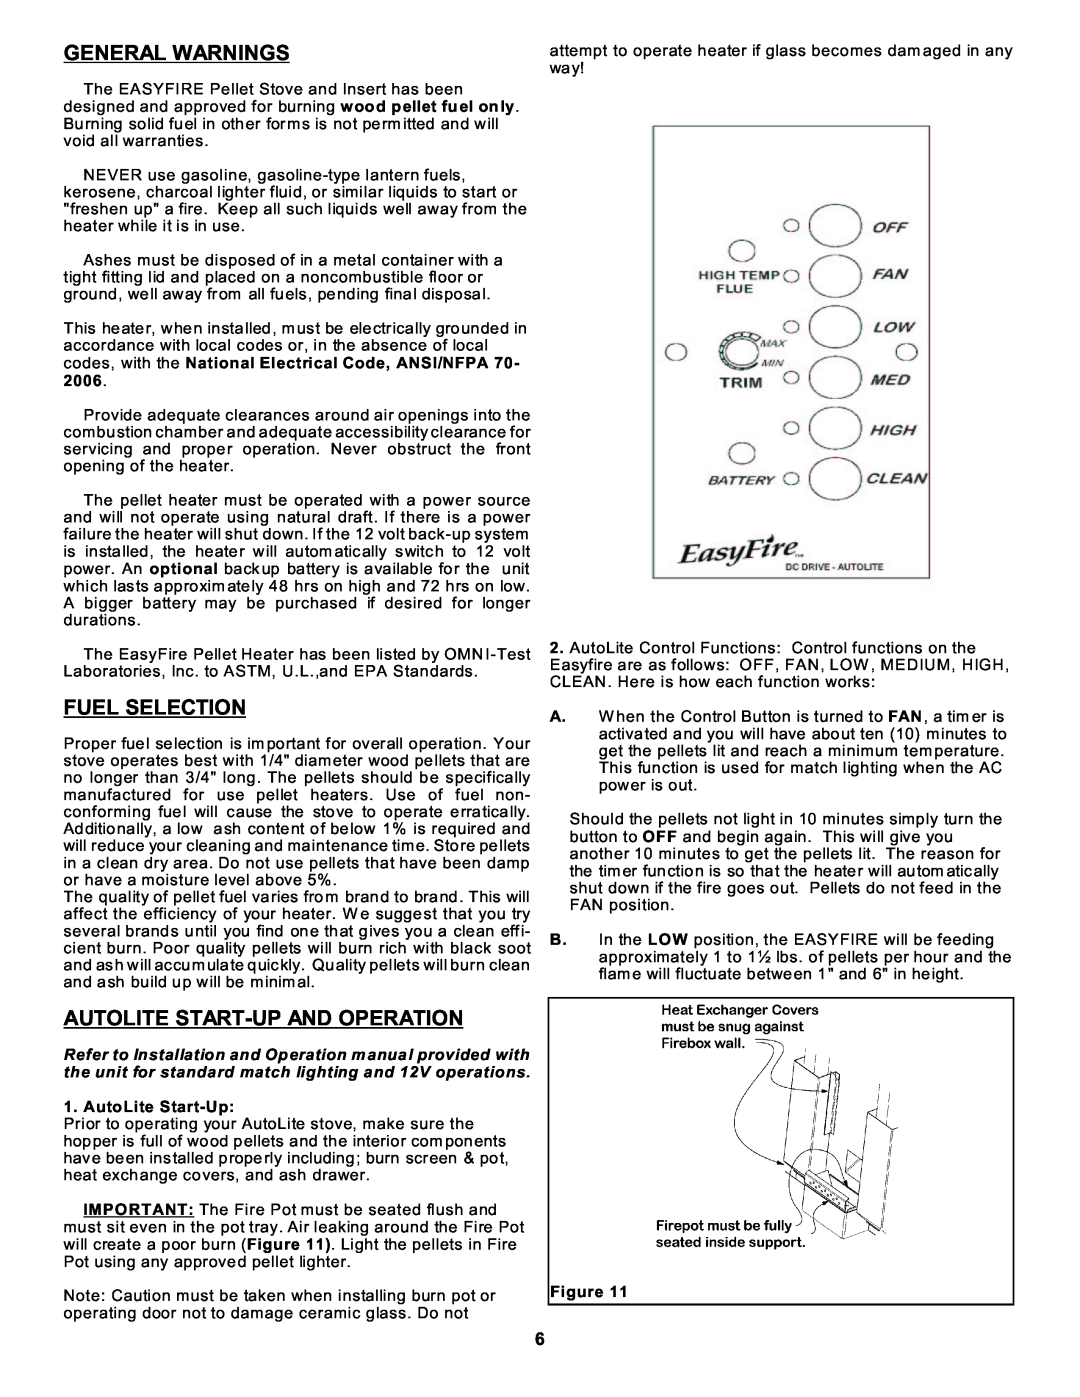 Sierra Products EF-4001B General Warnings, Fuel Selection, Autolite Start-Upand Operation, 2006, AutoLite Start-Up 